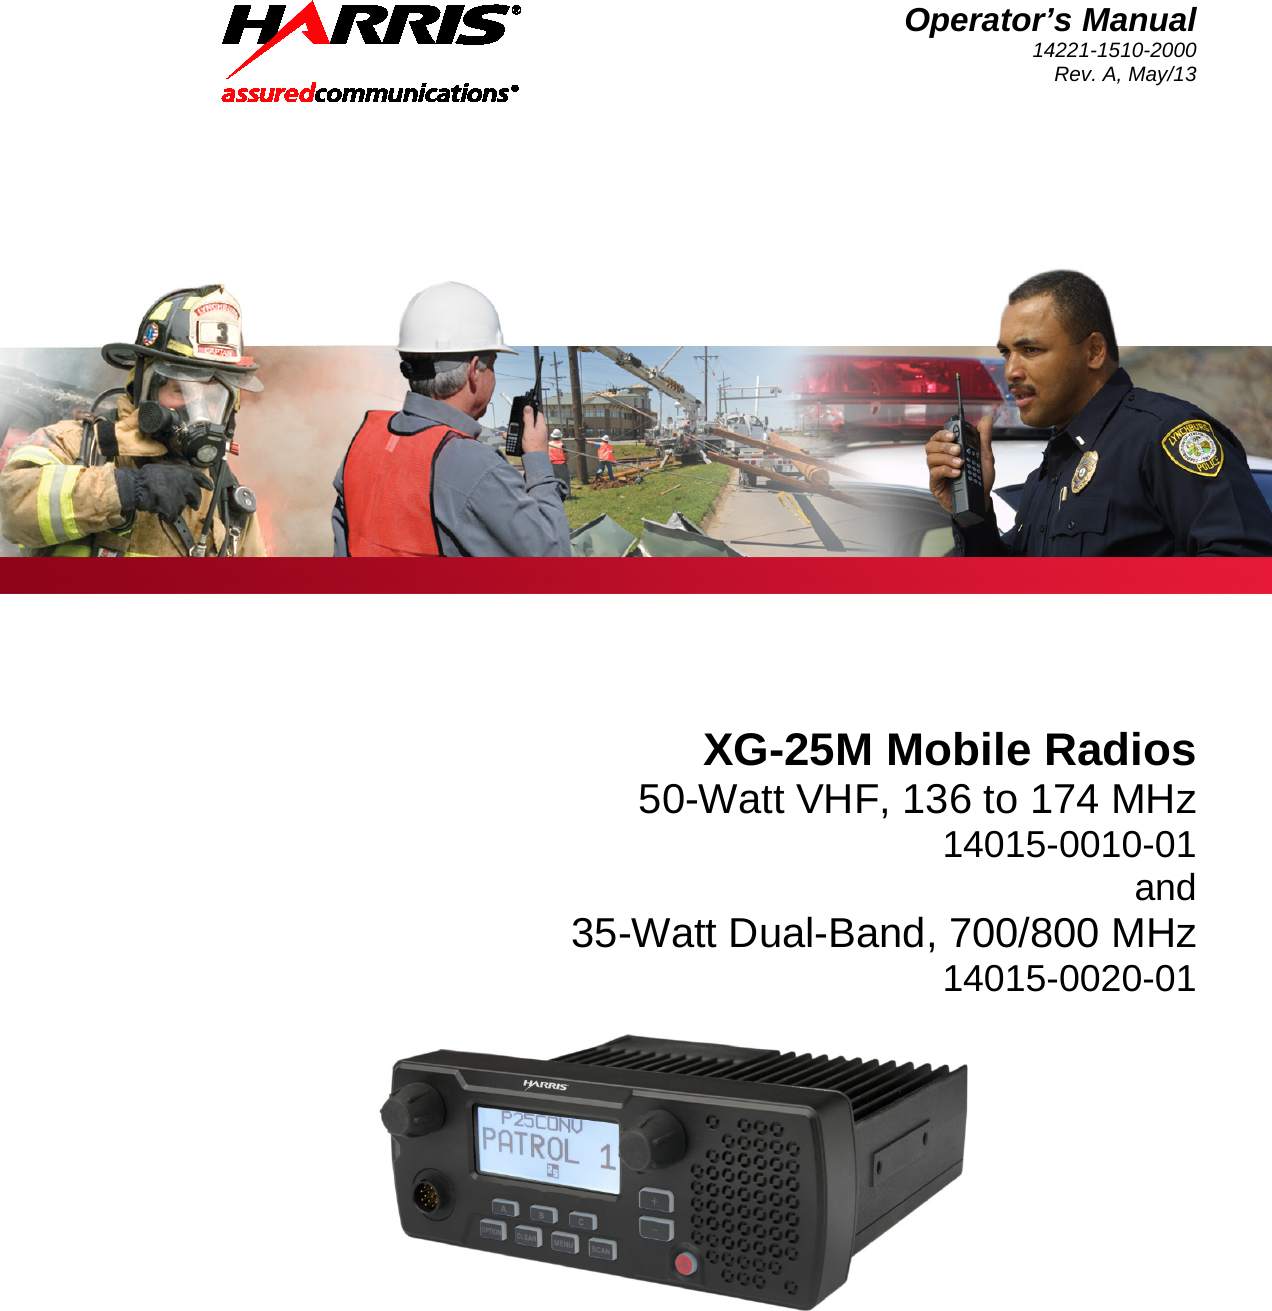 Operator’s Manual 14221-1510-2000 Rev. A, May/13   XG-25M Mobile Radios 50-Watt VHF, 136 to 174 MHz 14015-0010-01 and 35-Watt Dual-Band, 700/800 MHz 14015-0020-01  